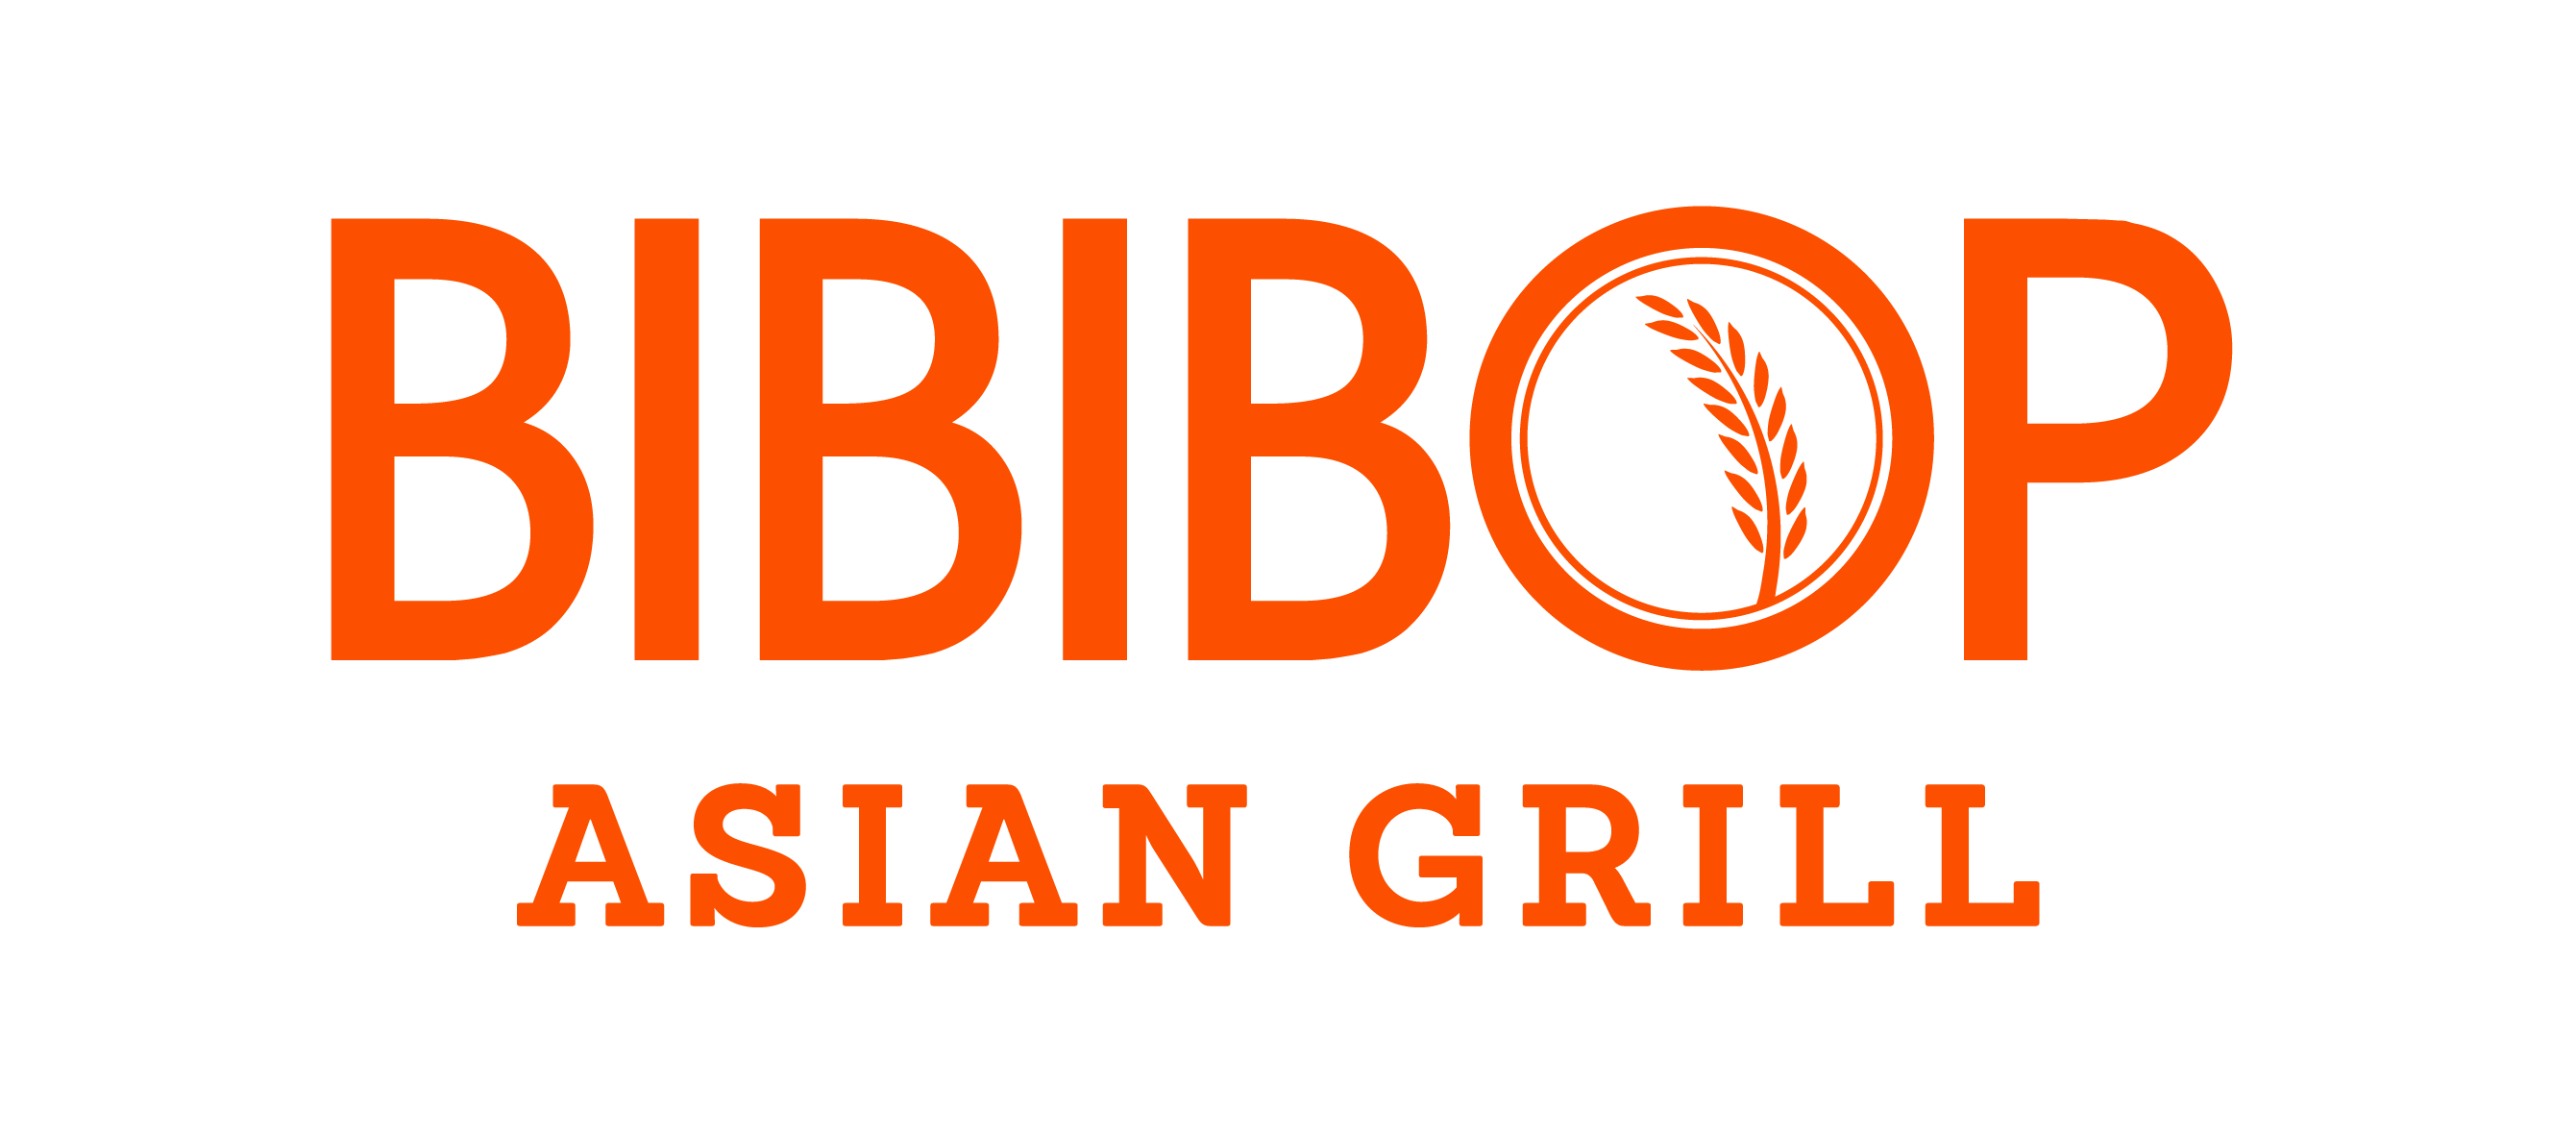 Sponsor BIBIBOP Asian Grill